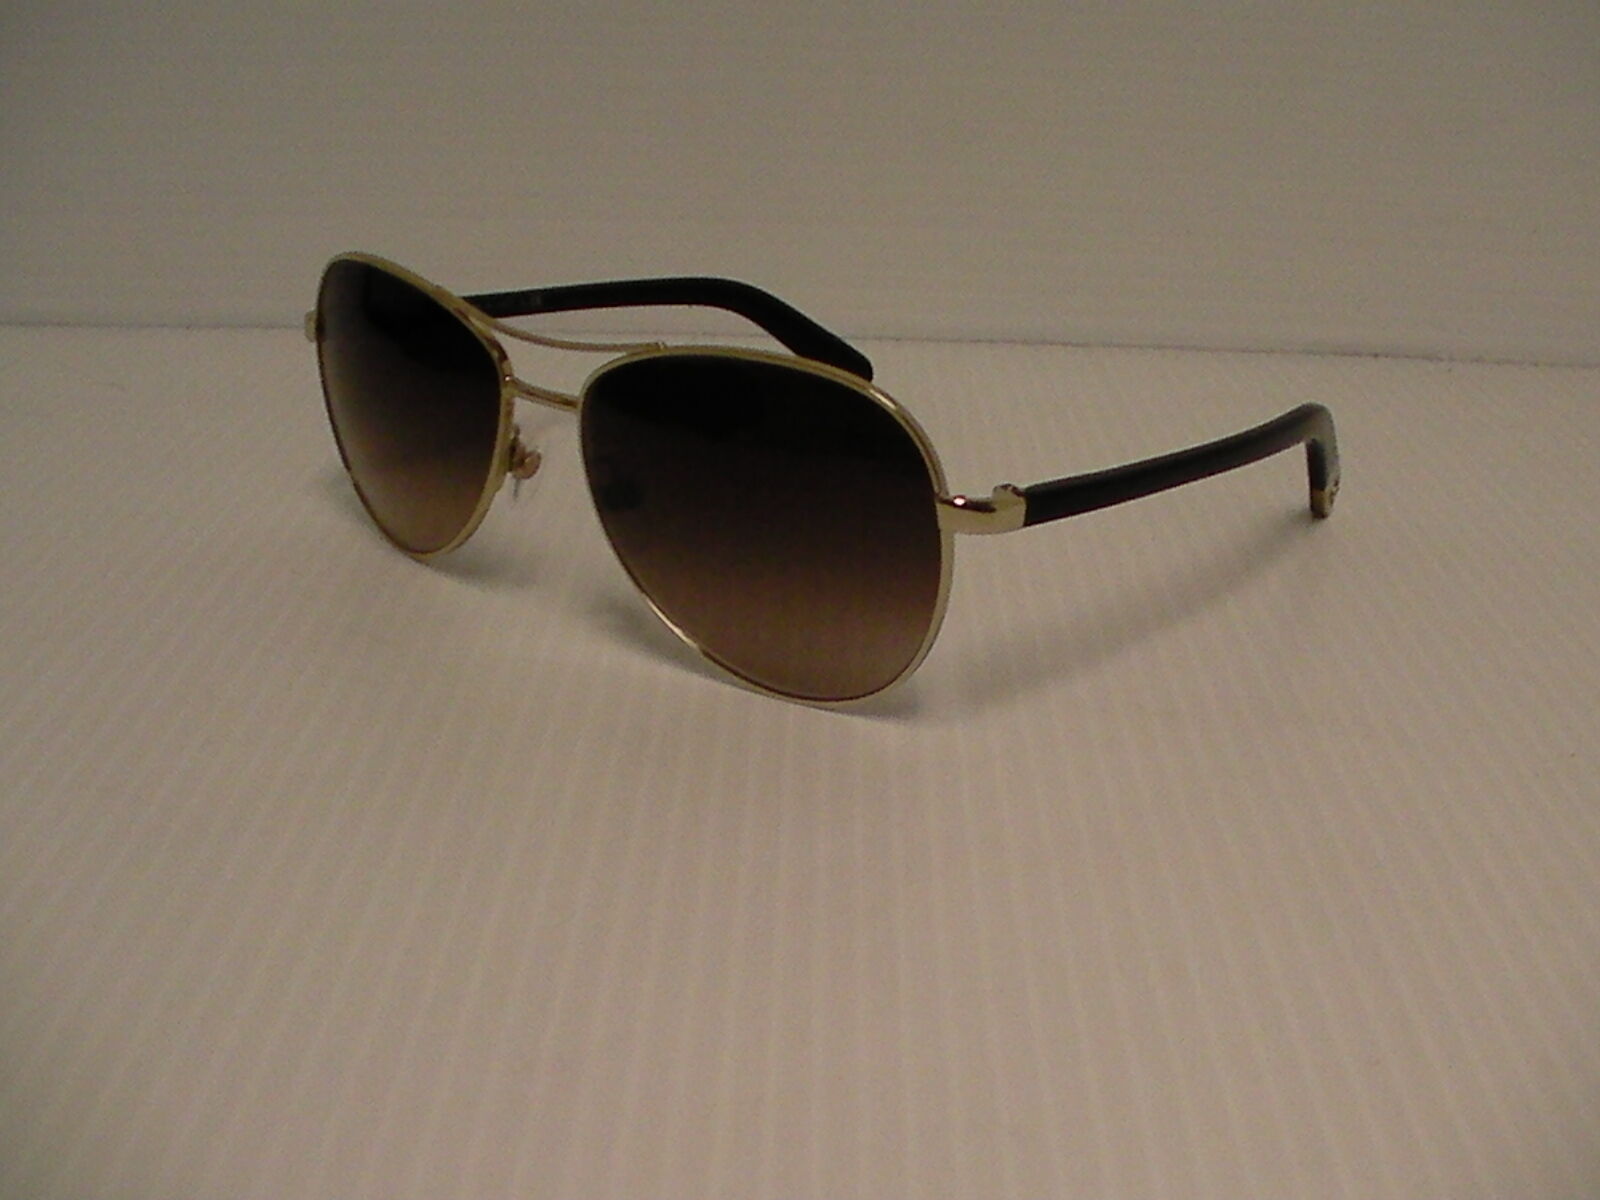 Authentic Chanel 4201 c.395/3B gold brown lenses Aviator Sunglasses 58mm